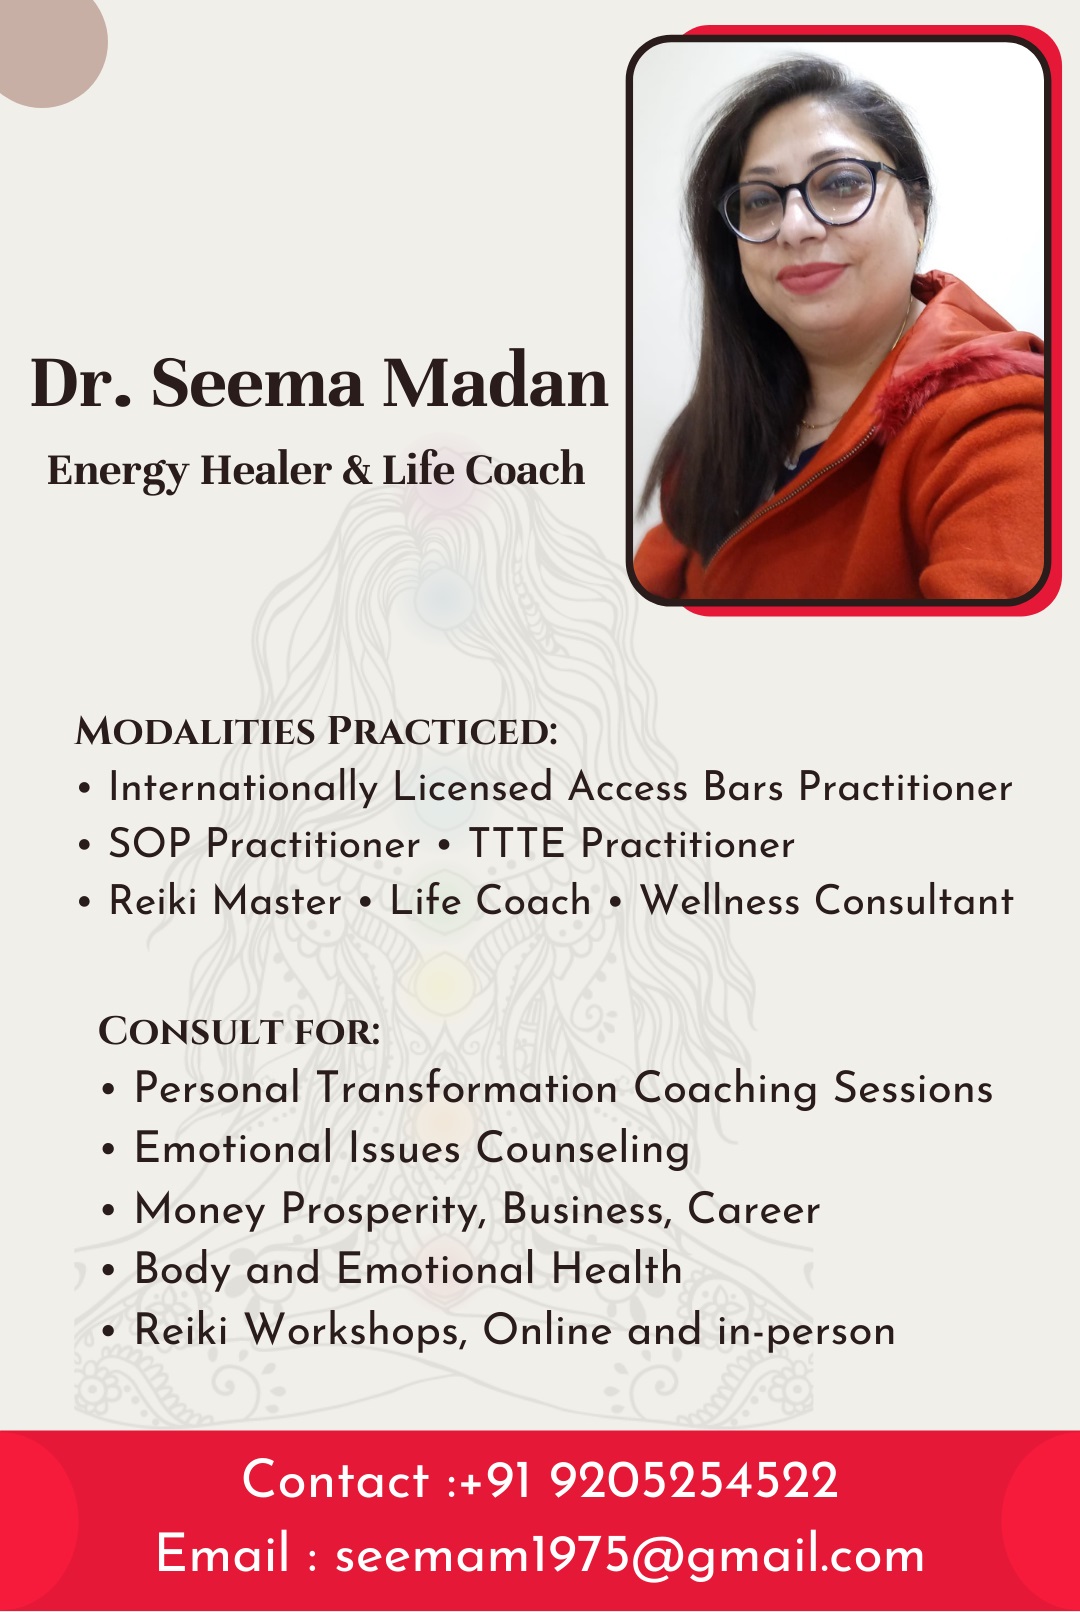 Dr. Seema Madan - Energy Healer & Life Coach - Surat